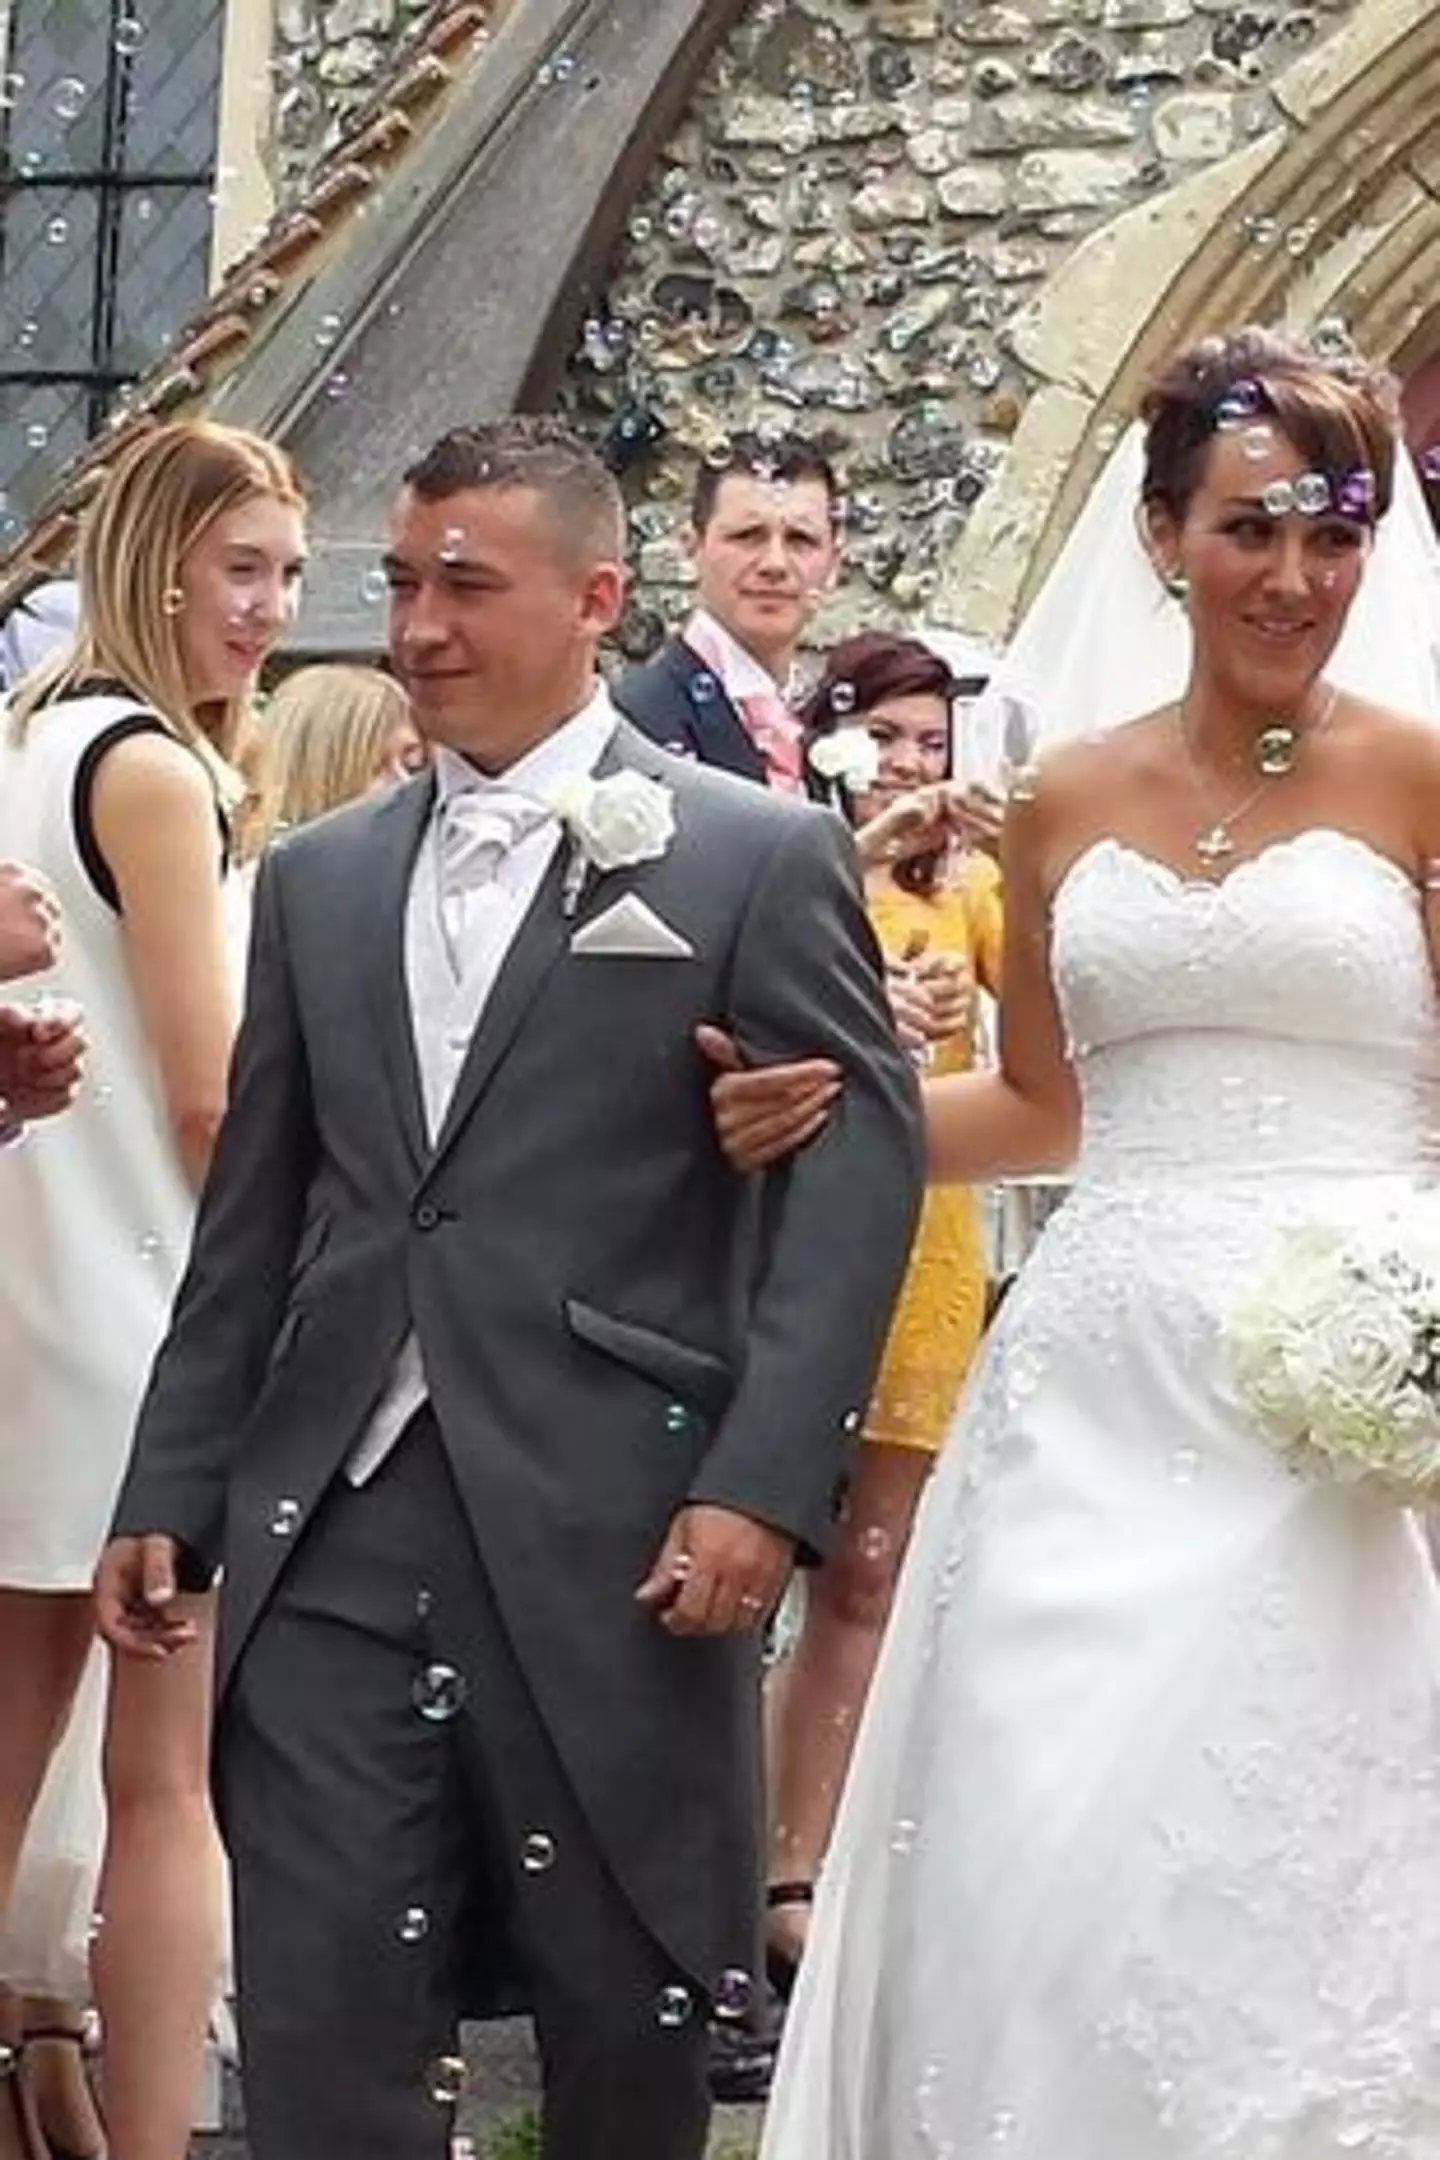 Shari and Ryan's wedding day in 2015.